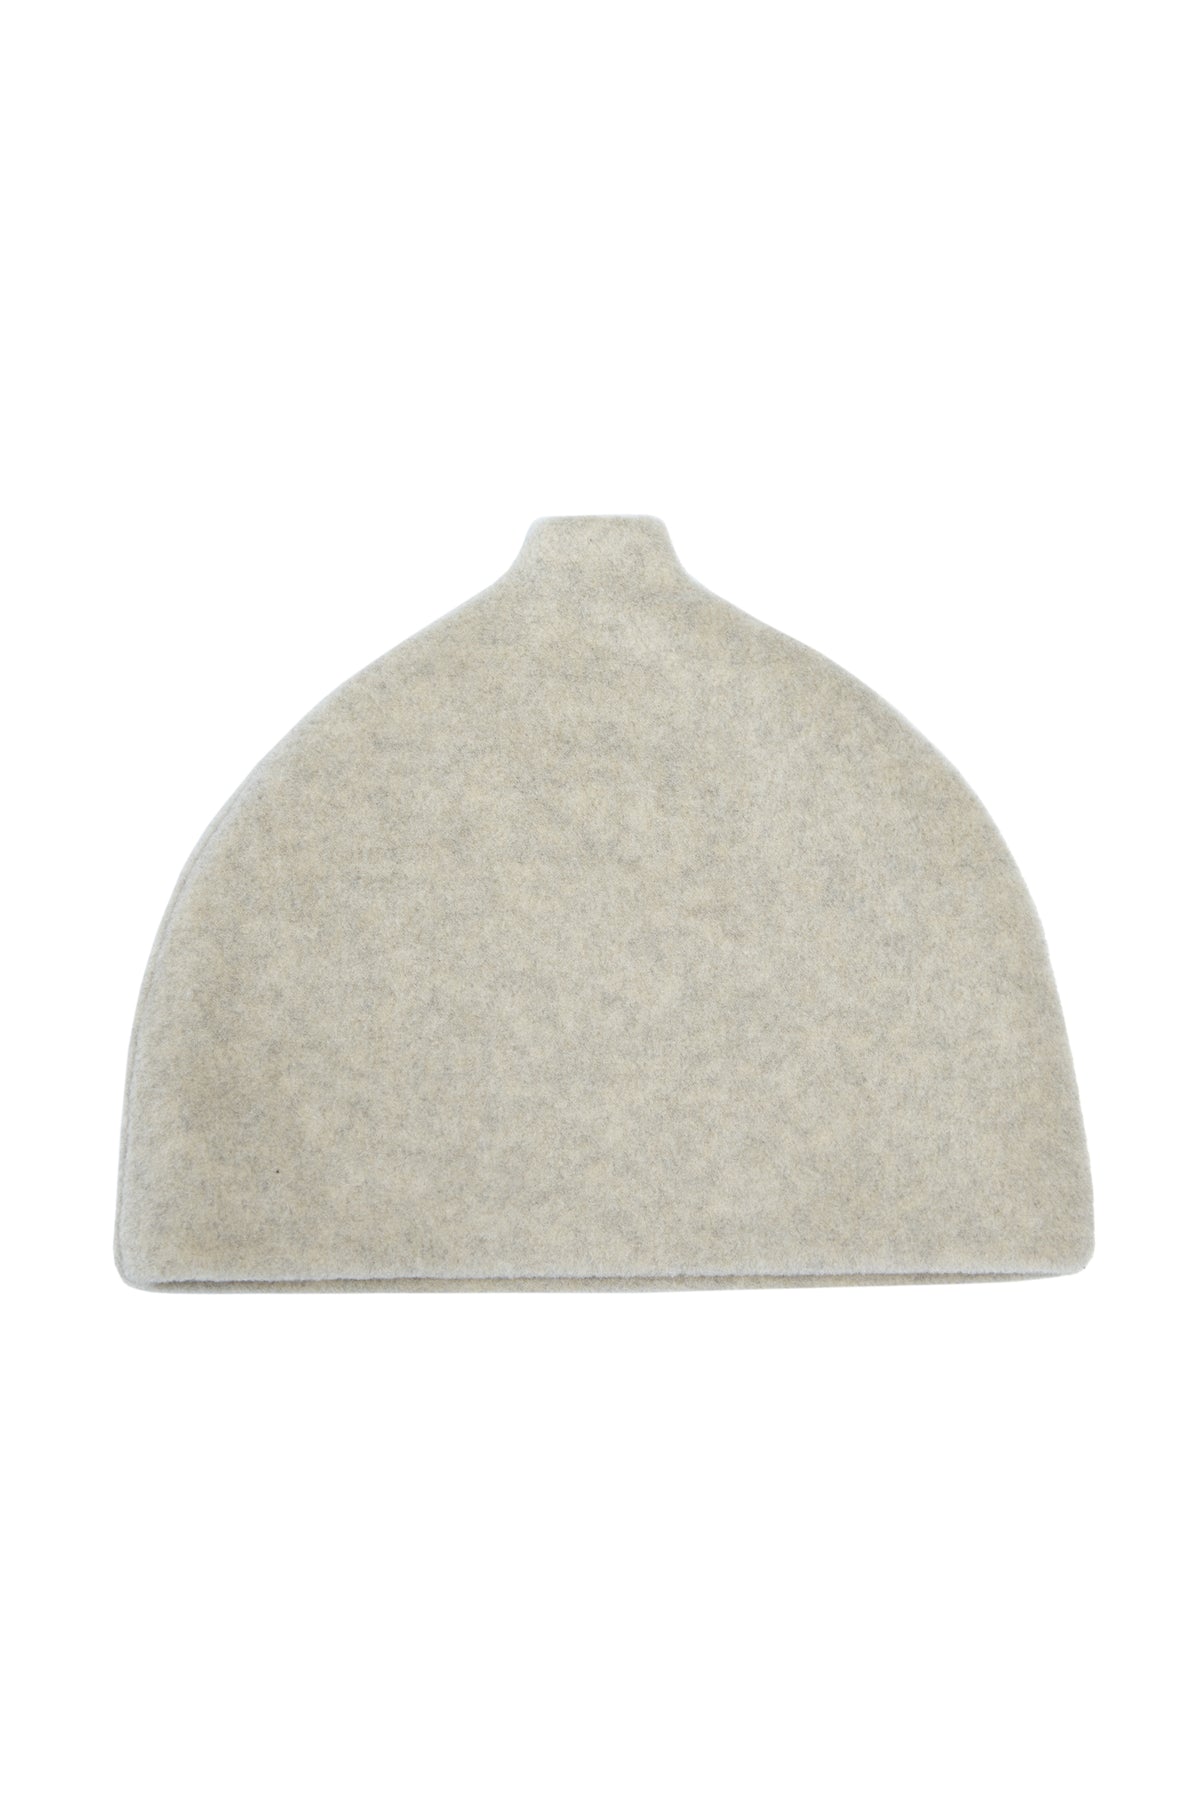 Sauna Hat | Saunagus Hat | Soft and Warm | Shop at HSCPH